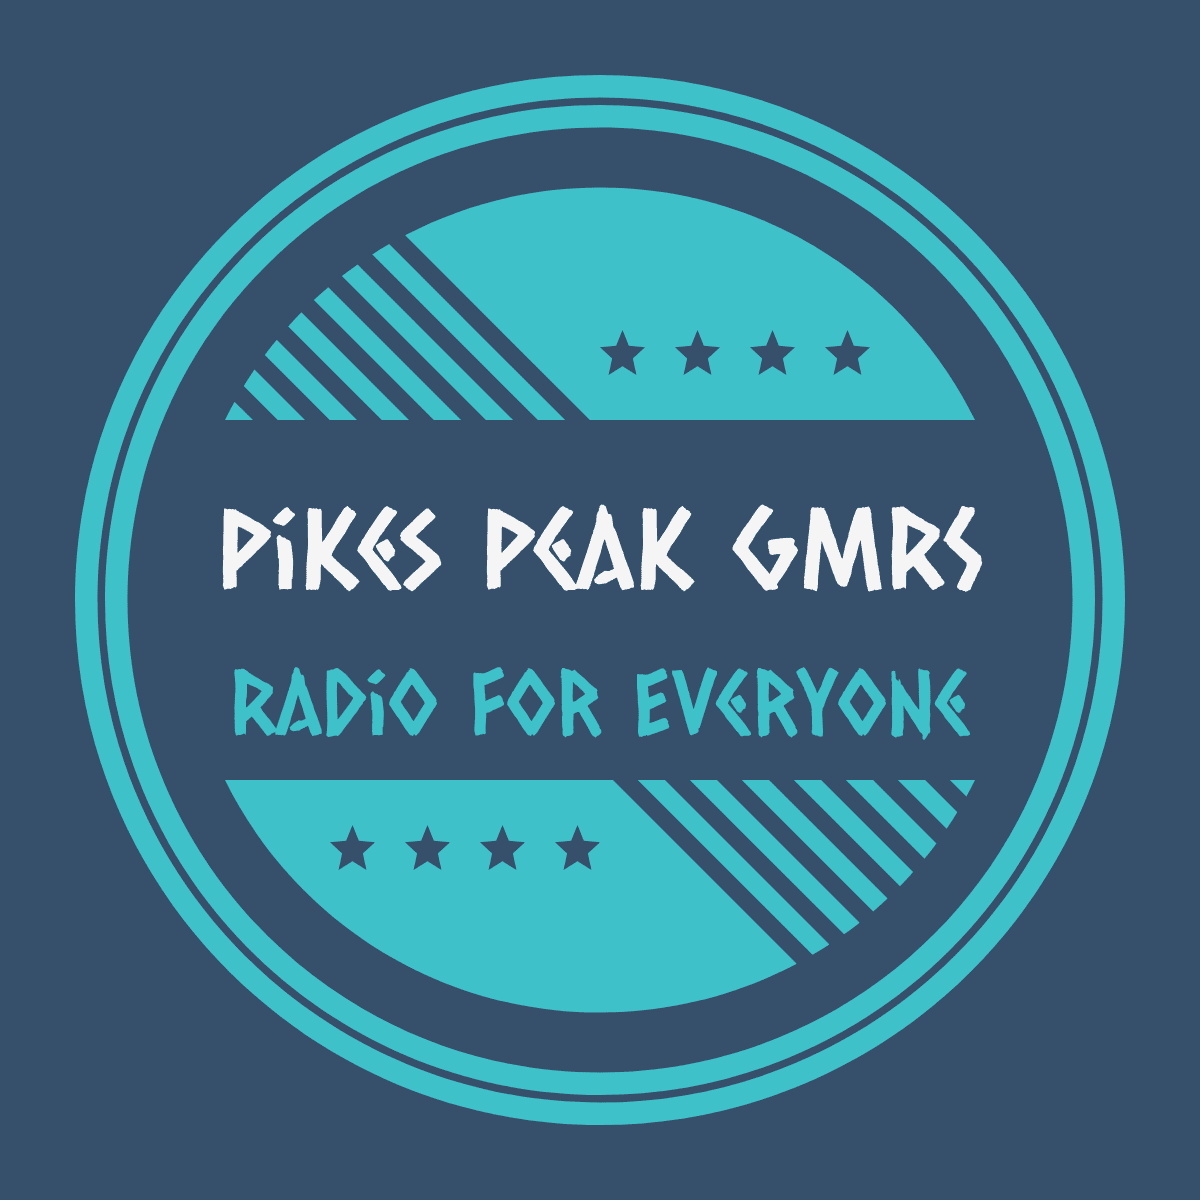 Pikes Peak GMRS